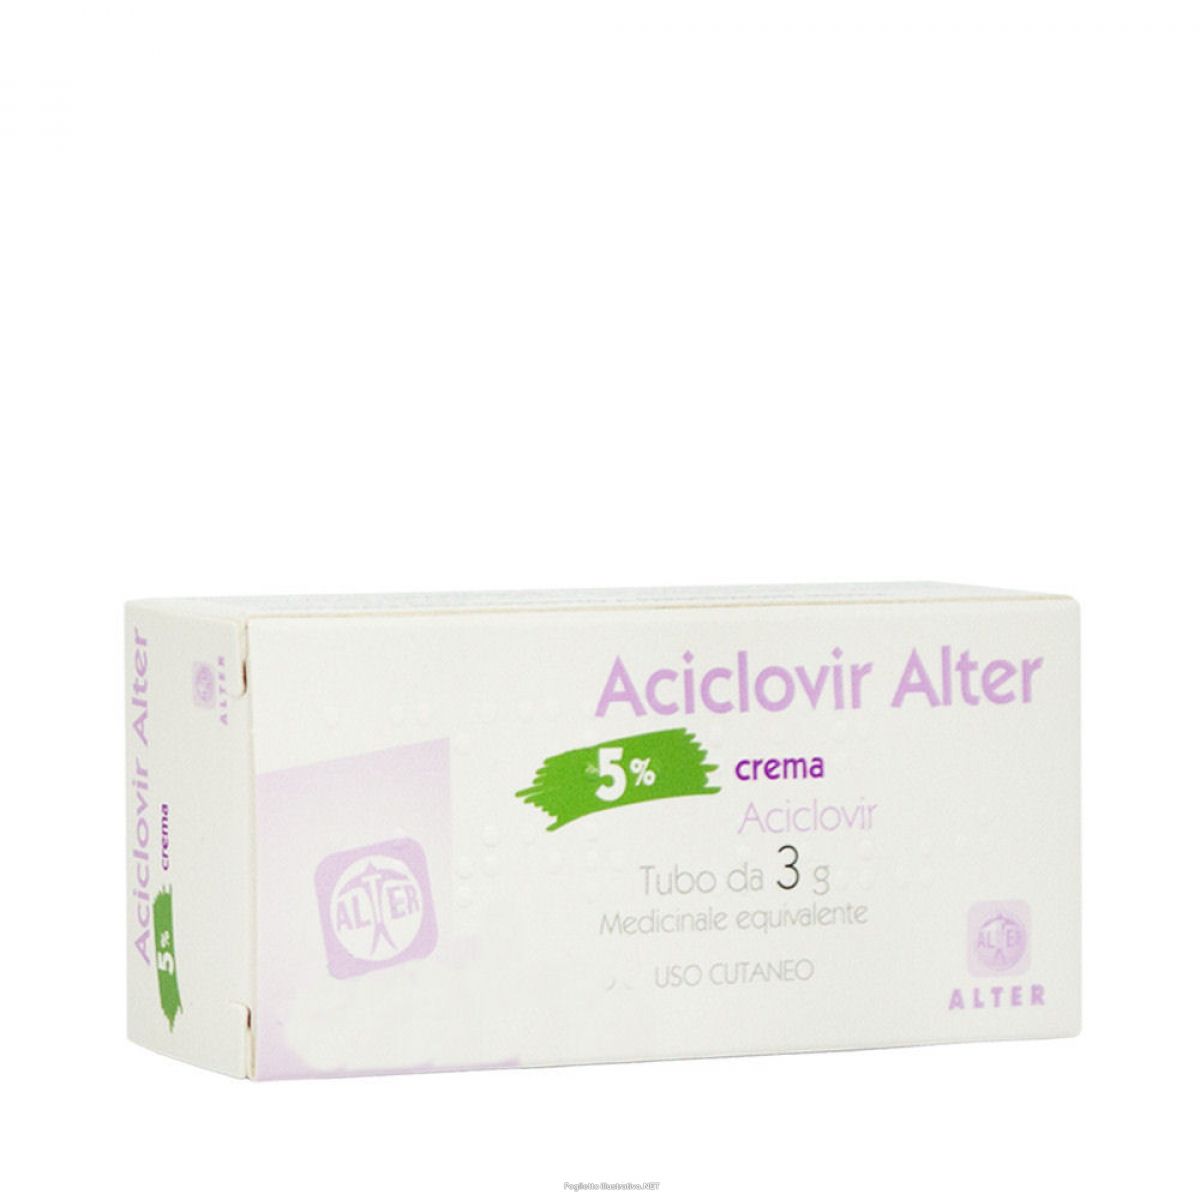 Farmahope | Aciclovir alter 5% crema 5 crema1 tubo da 3 g Online pharmacy